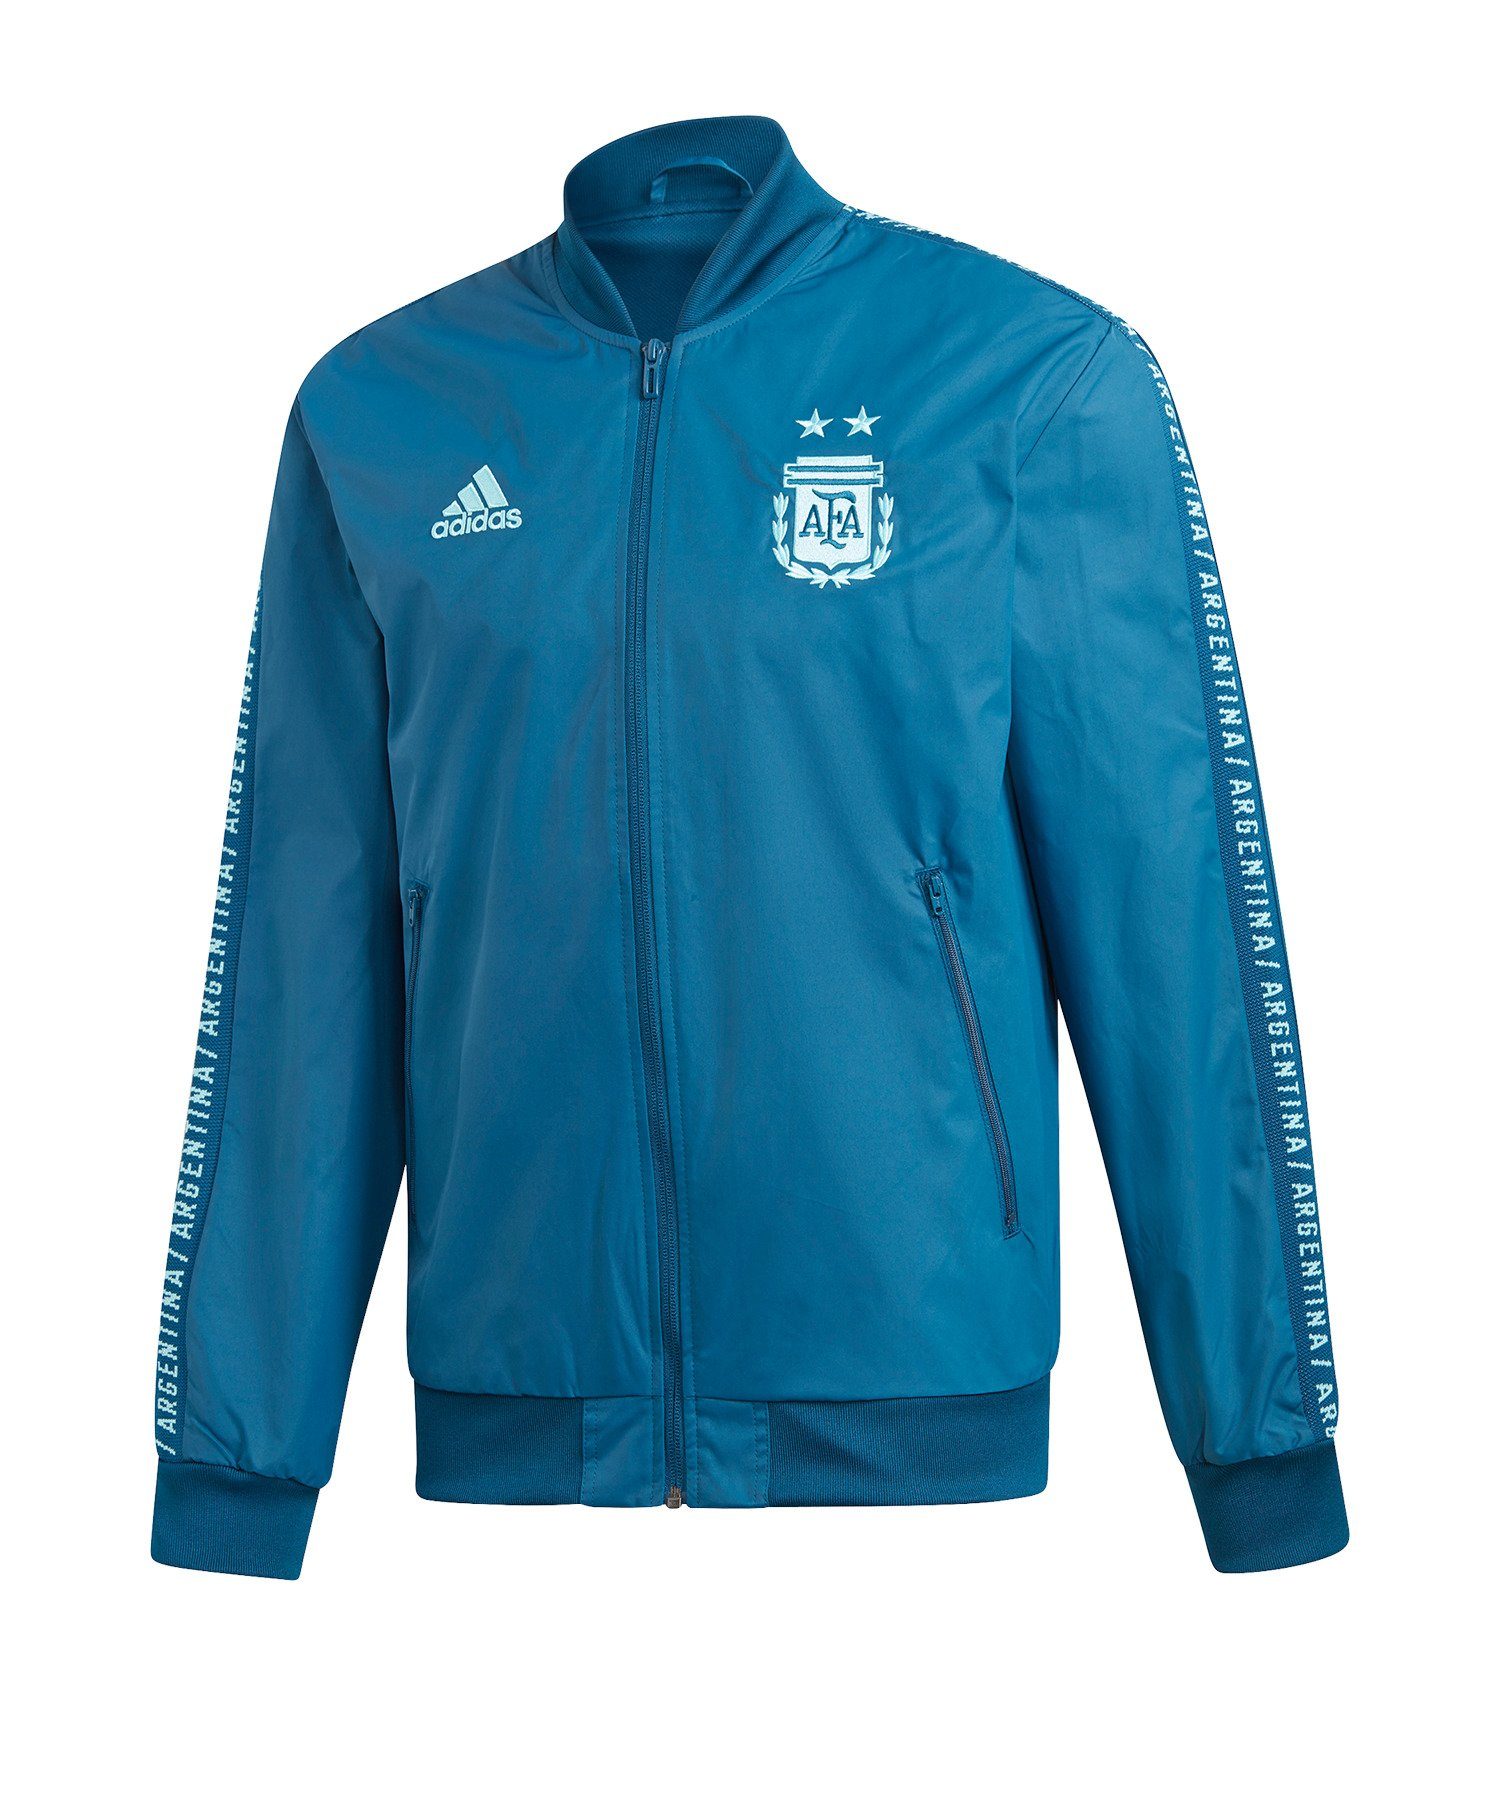 Penetrar multa Suyo adidas Performance Sweatjacke Argentinien Anthem Jacket Jacke 2019